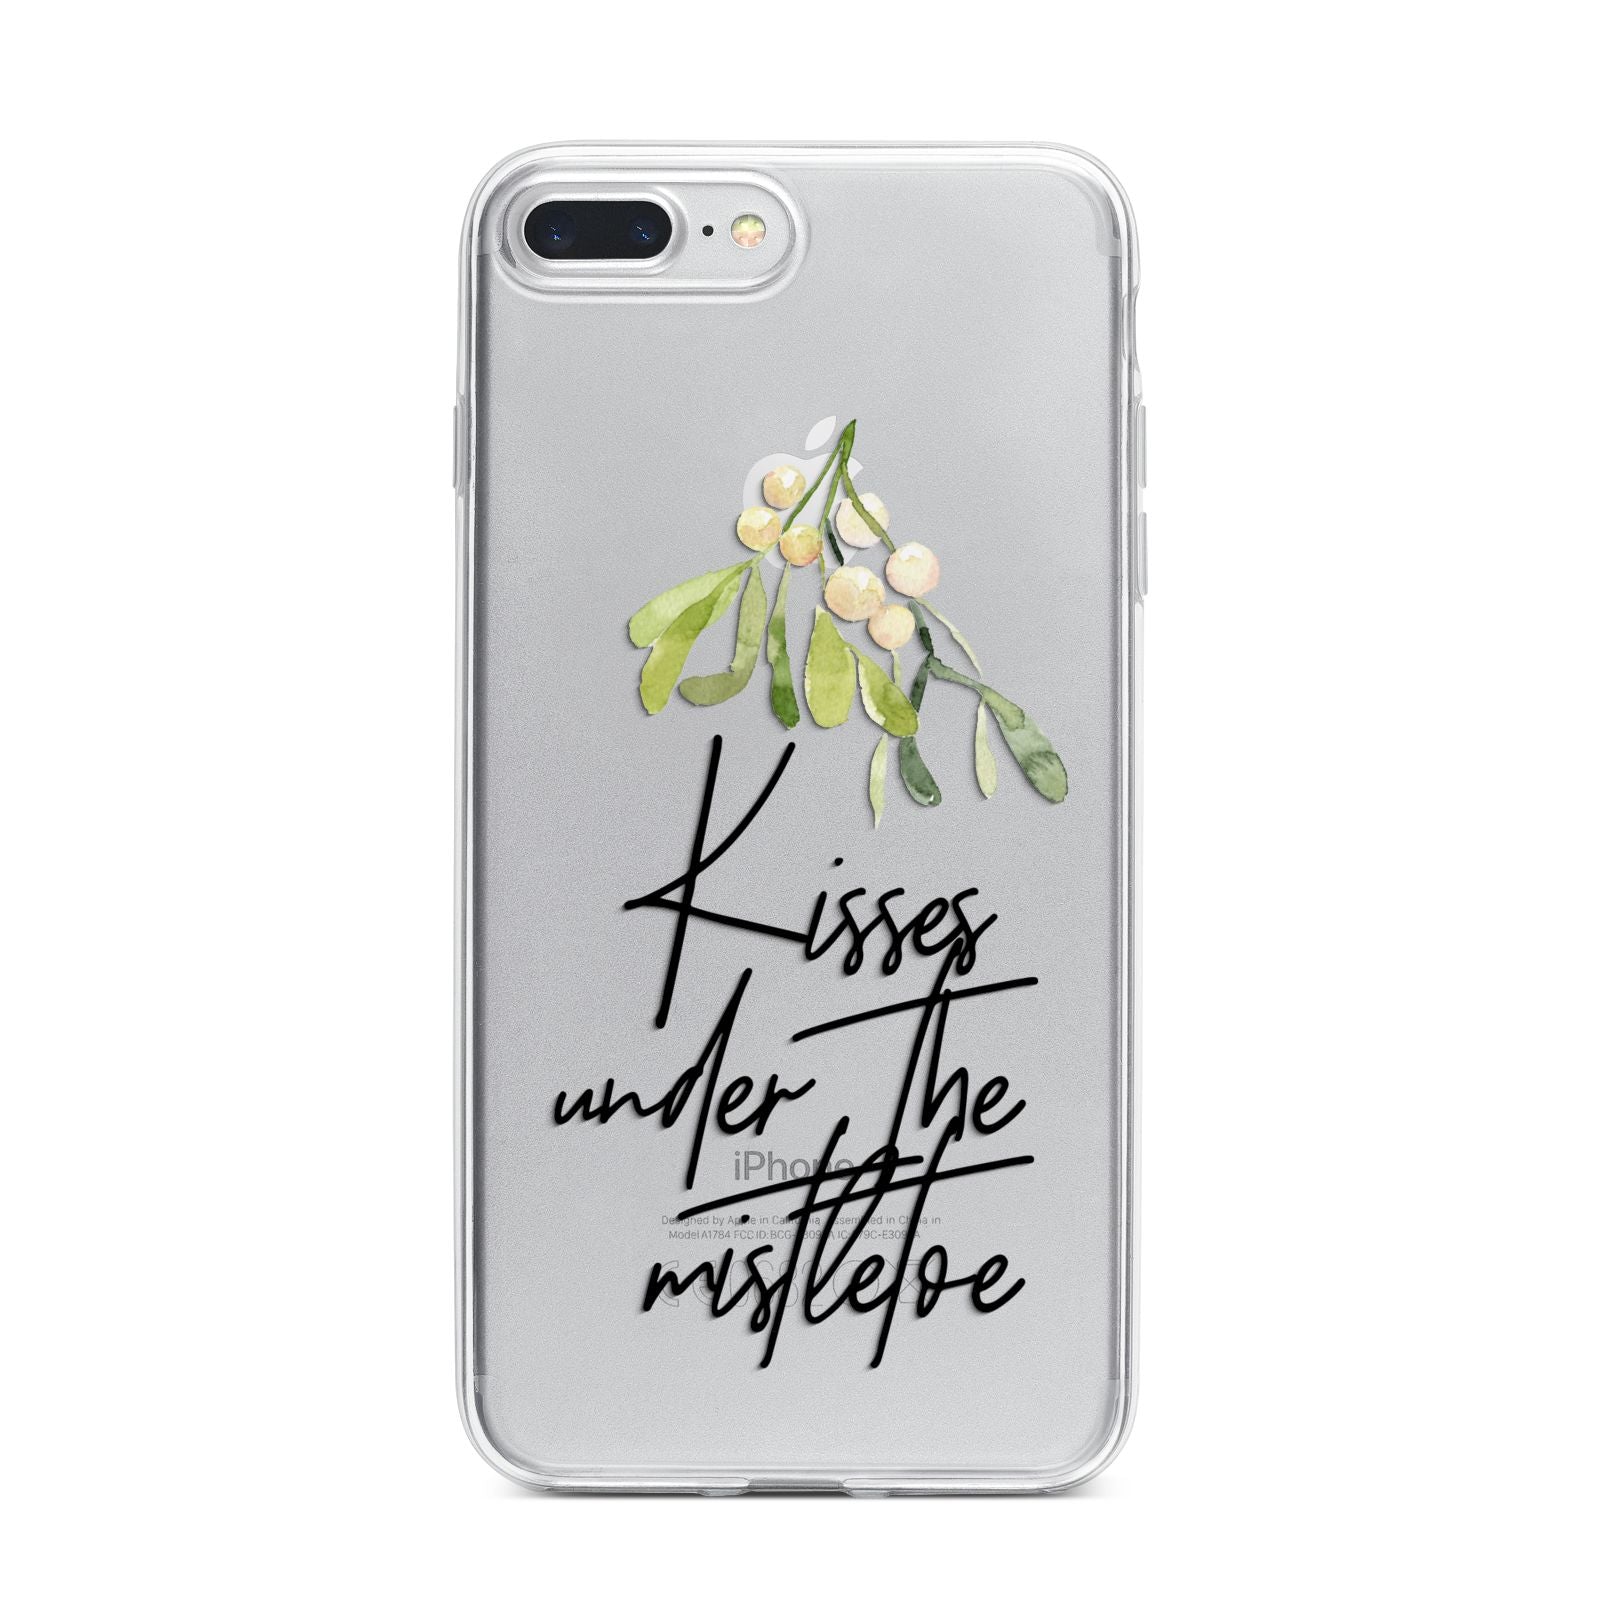 Kisses Under The Mistletoe iPhone 7 Plus Bumper Case on Silver iPhone